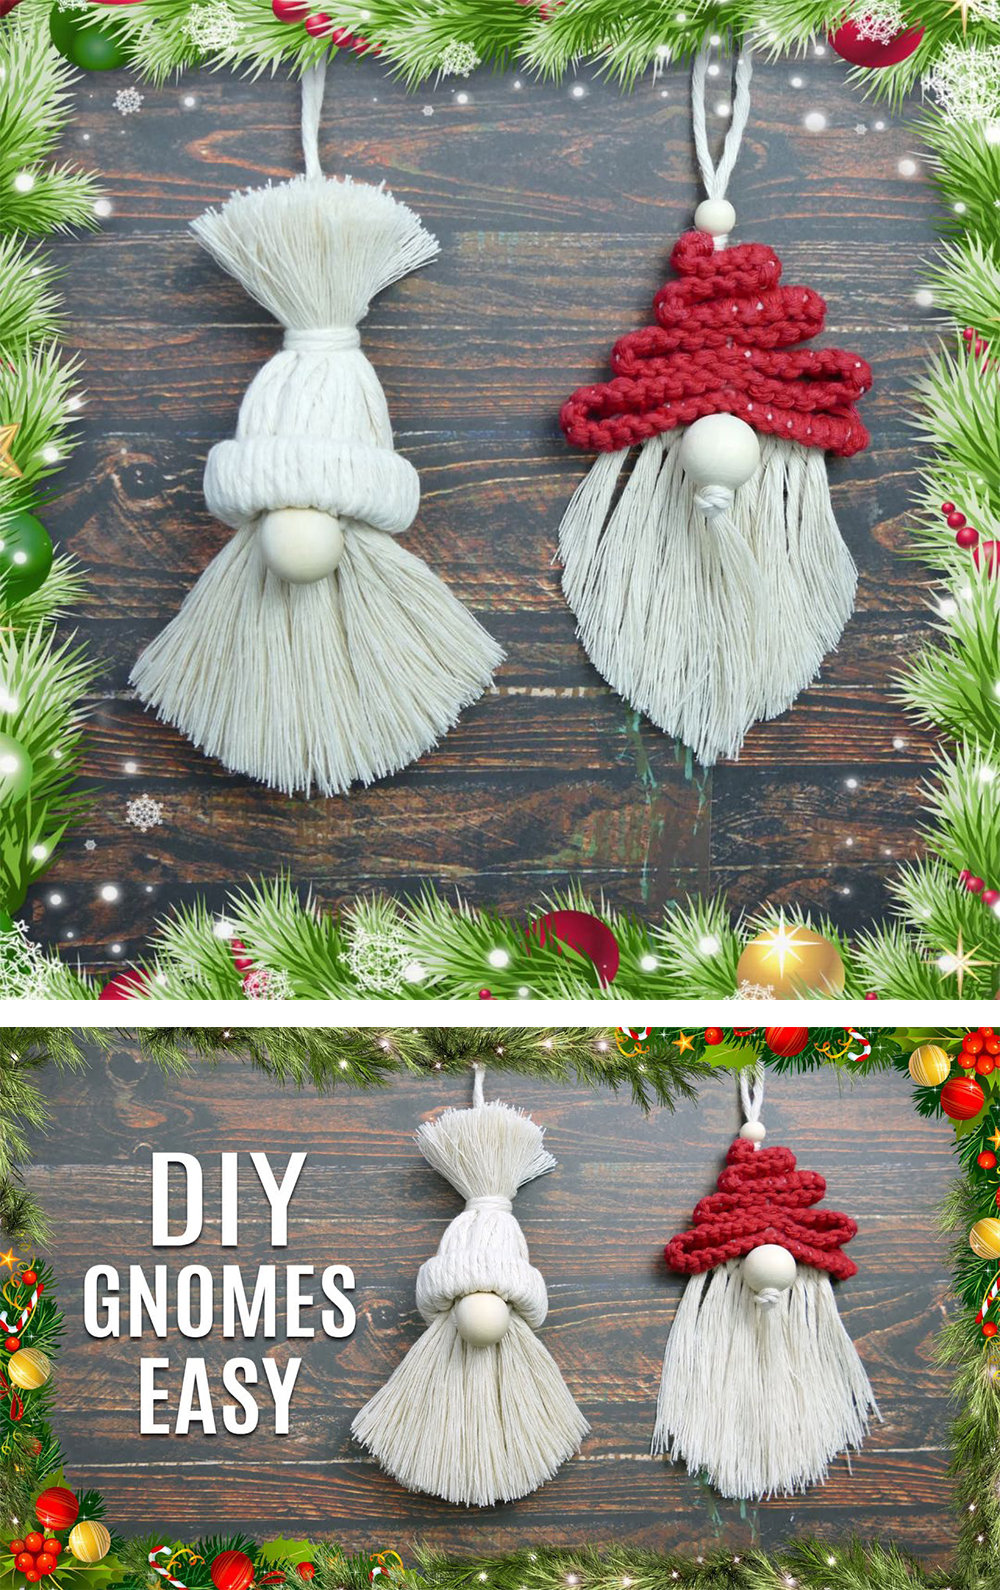 How To Make Easy Christmas Gnomes